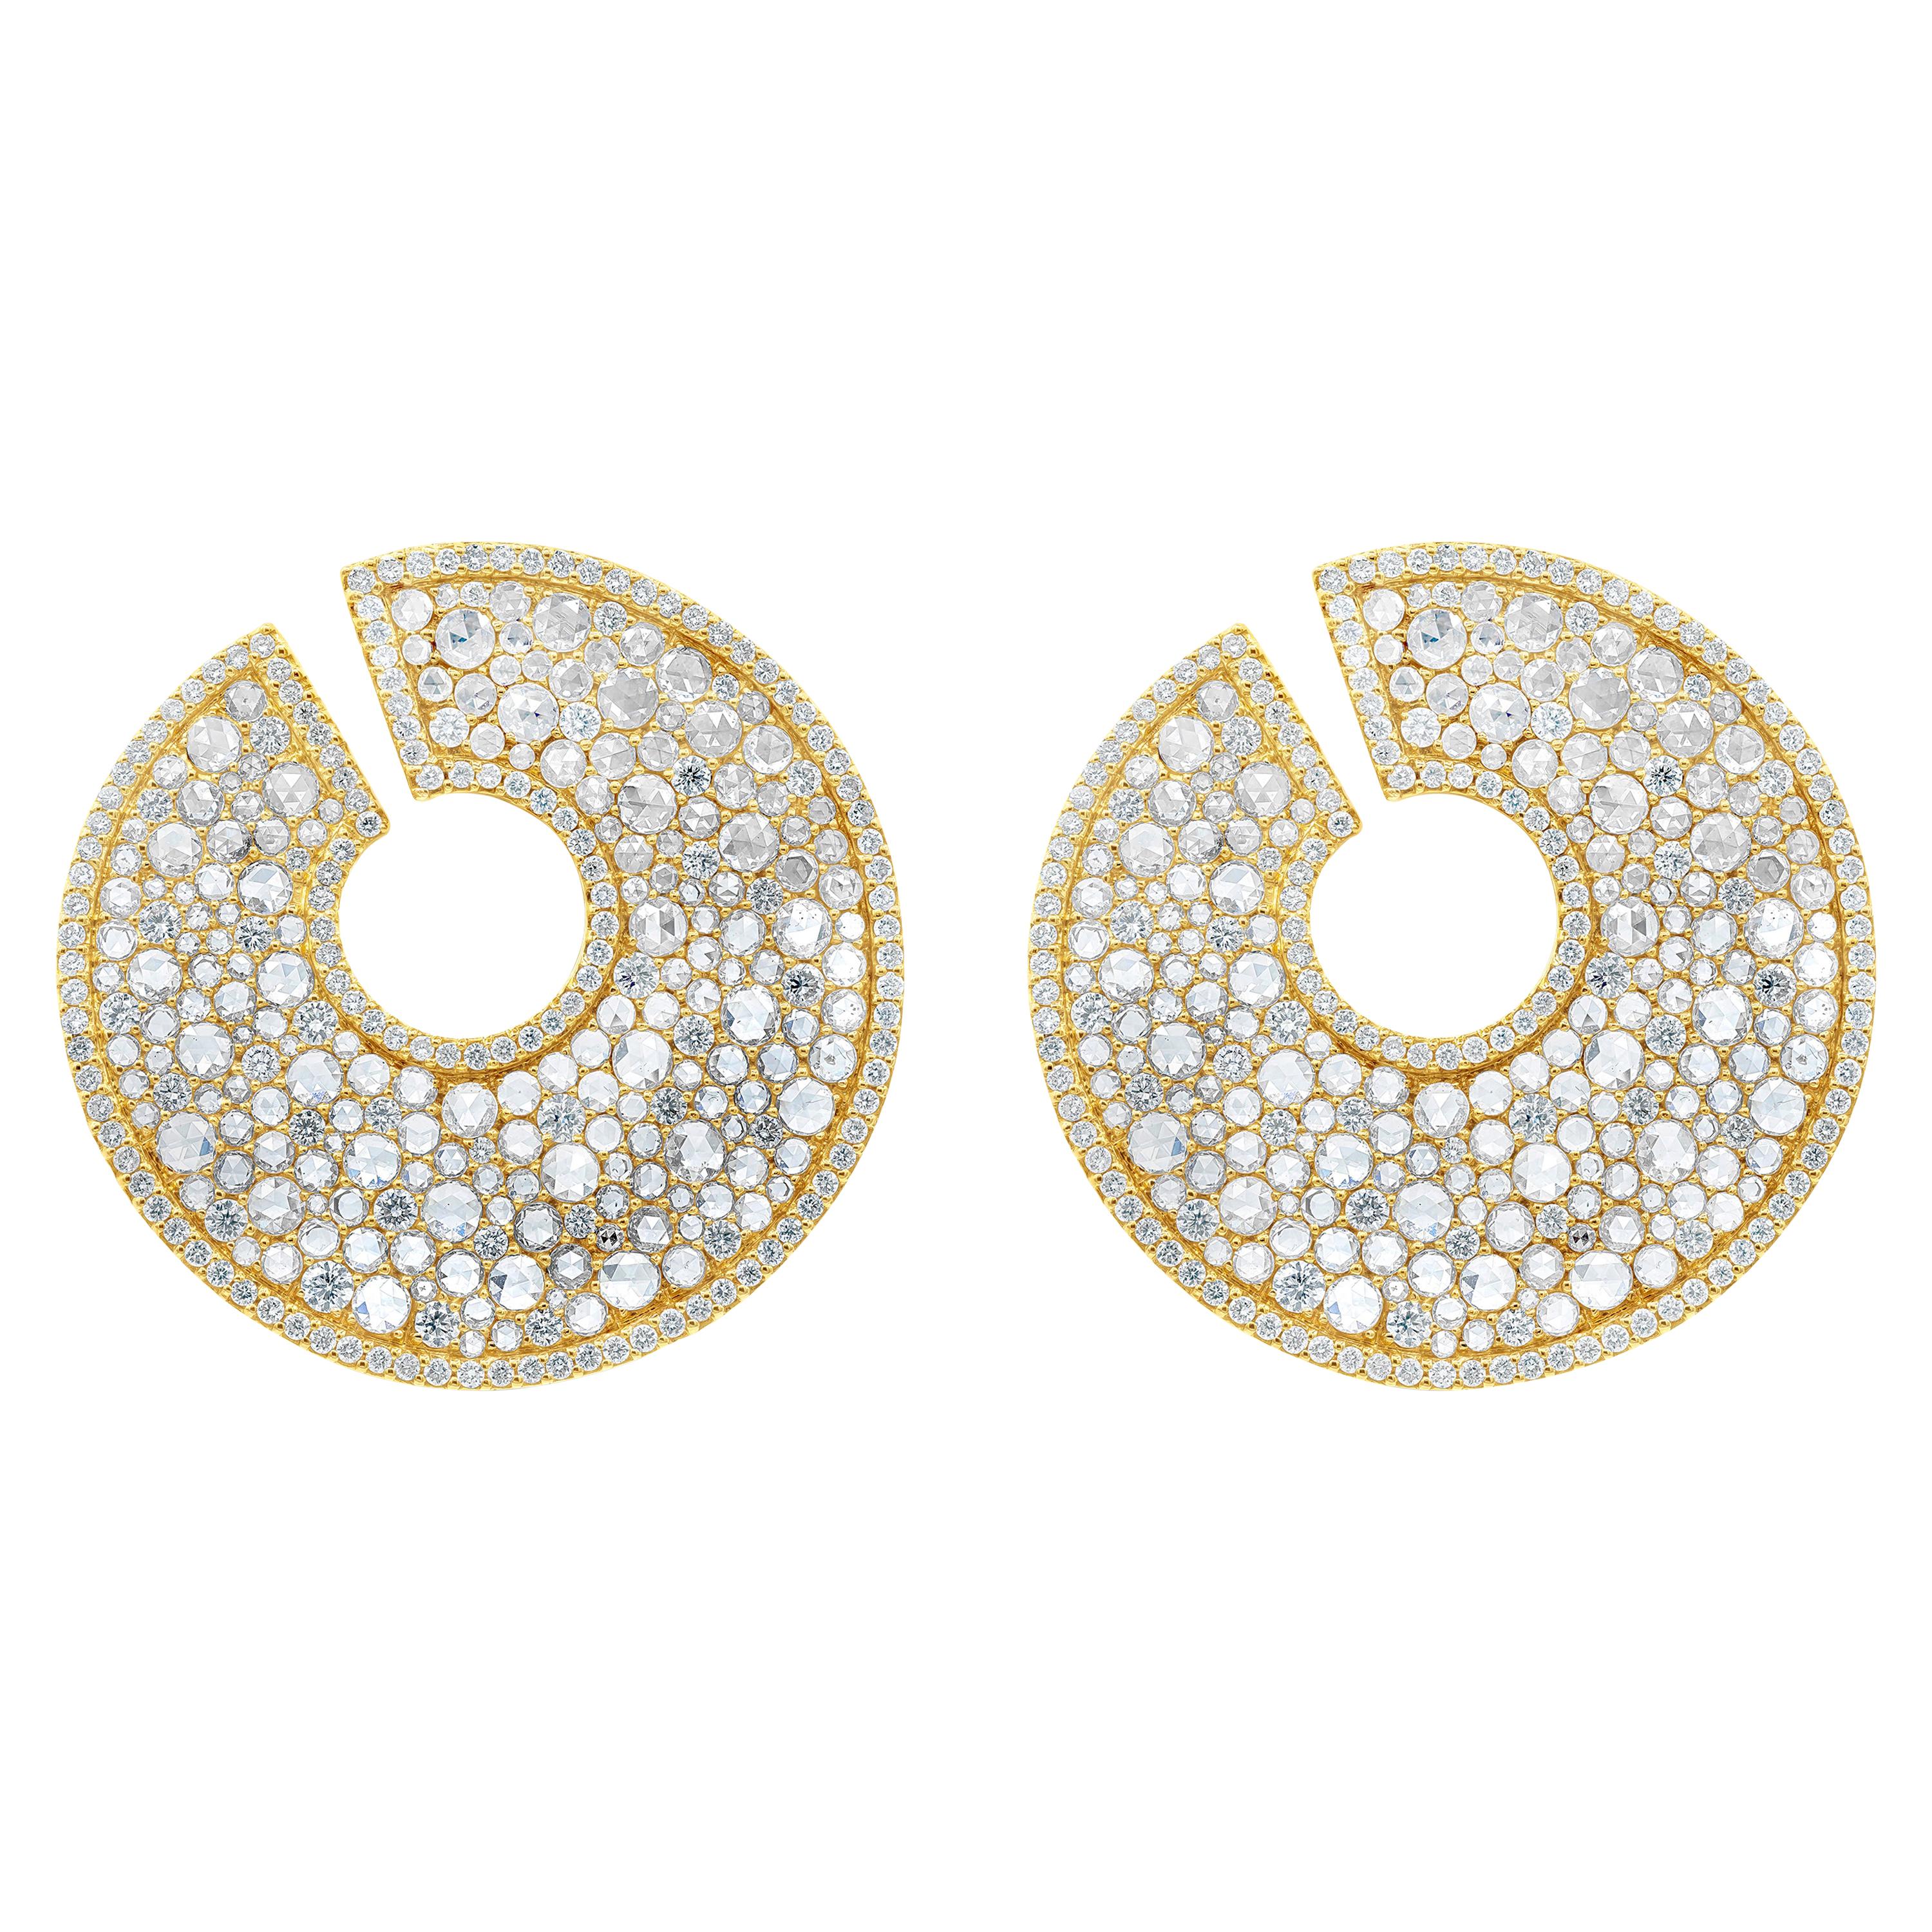 Roman Malakov 14.19 Carats Total Mixed Cut Diamonds Circular Clip-on Earrings For Sale